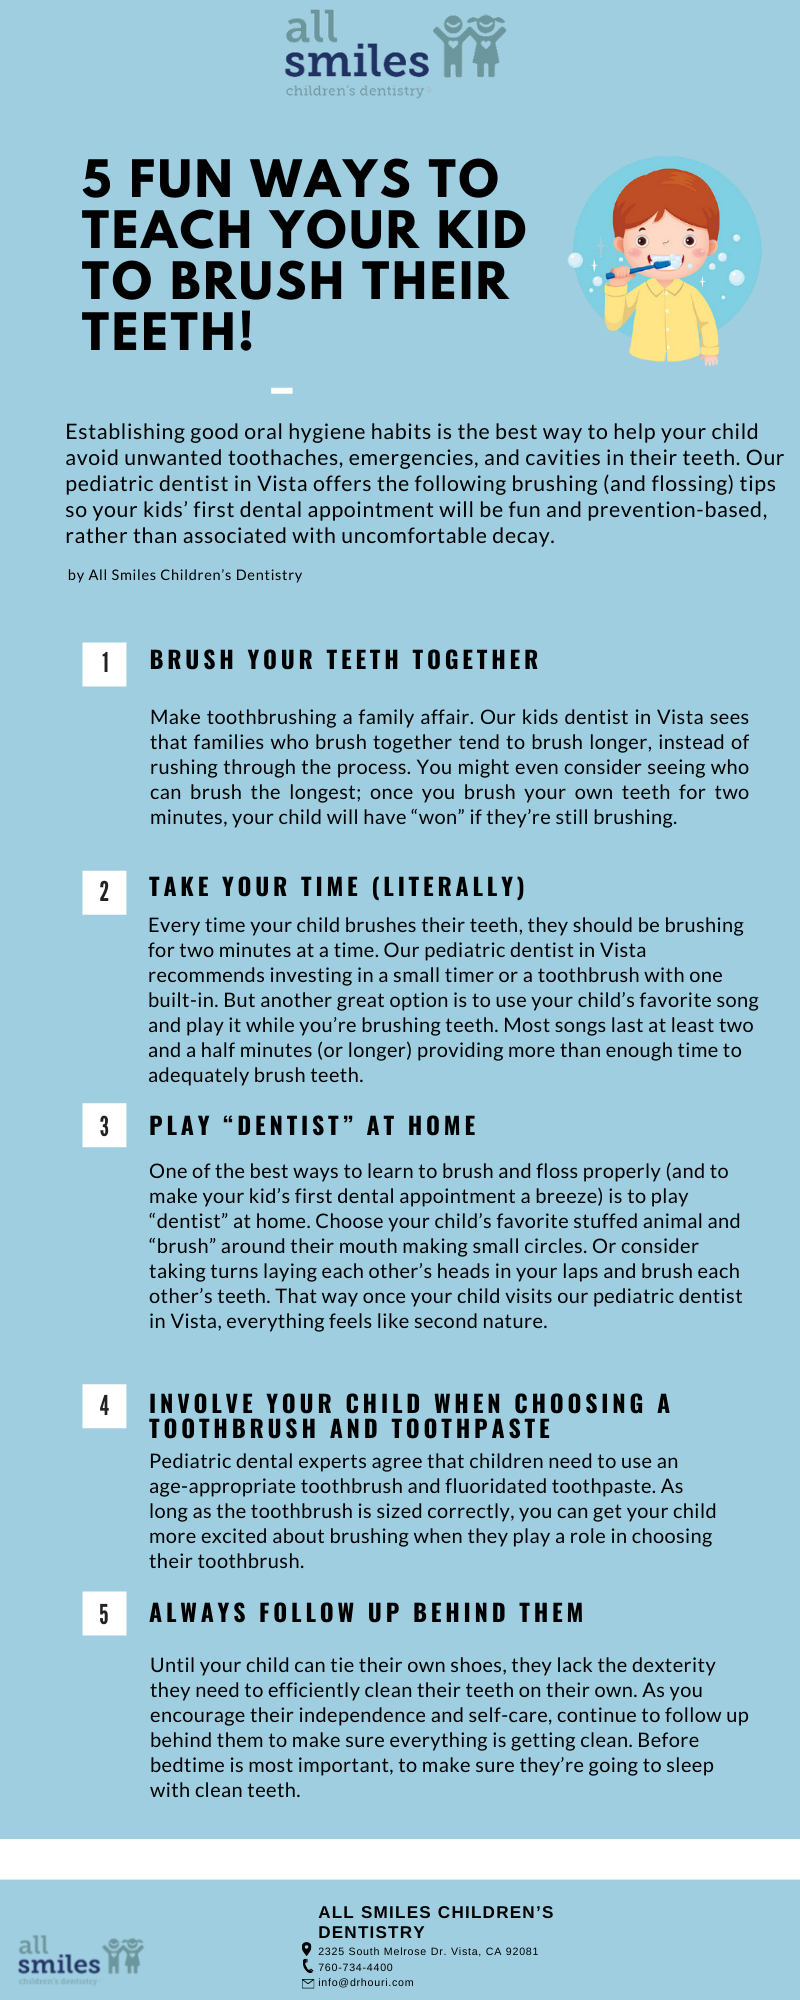 Learn here 5 Fun Ways to Teach Your Kid to Brush Their Teeth!